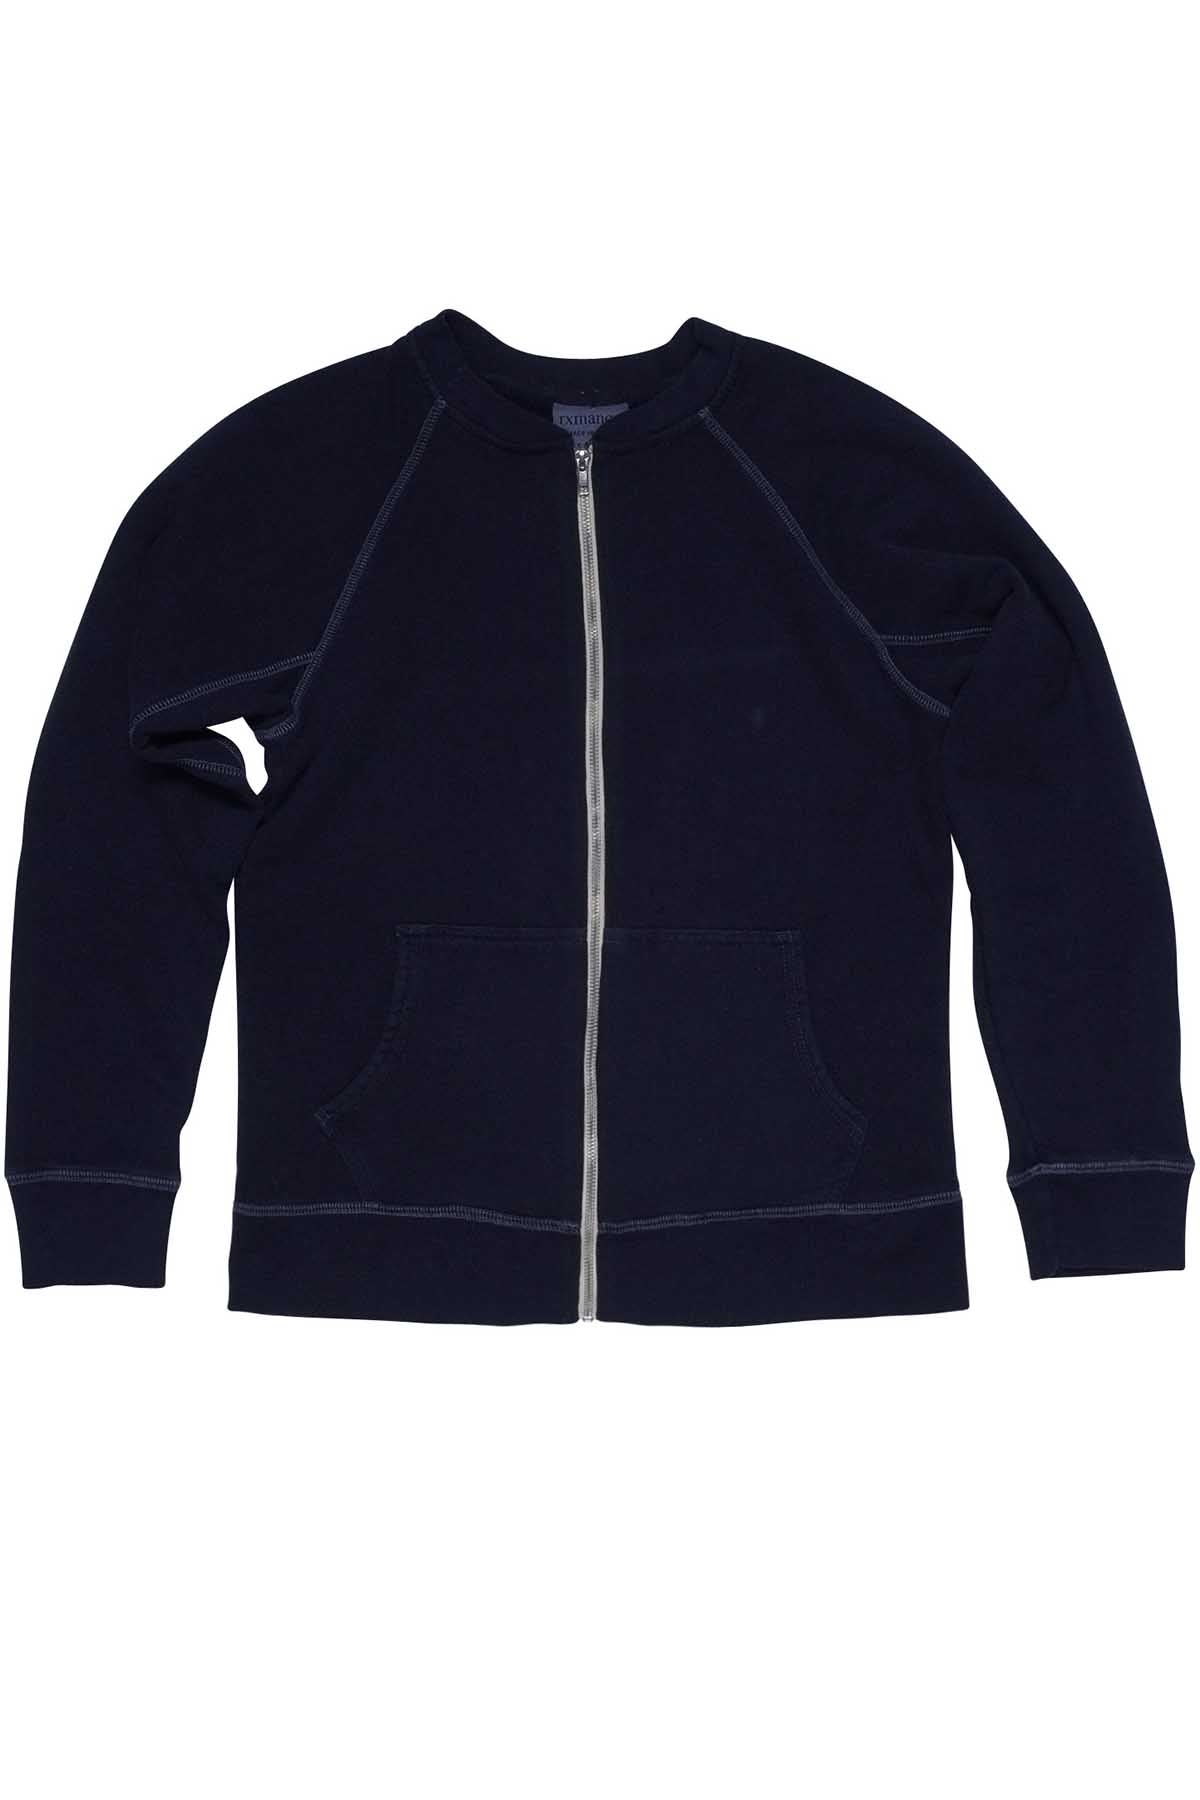 Rxmance Unisex Nite Blue Zipper Jacket